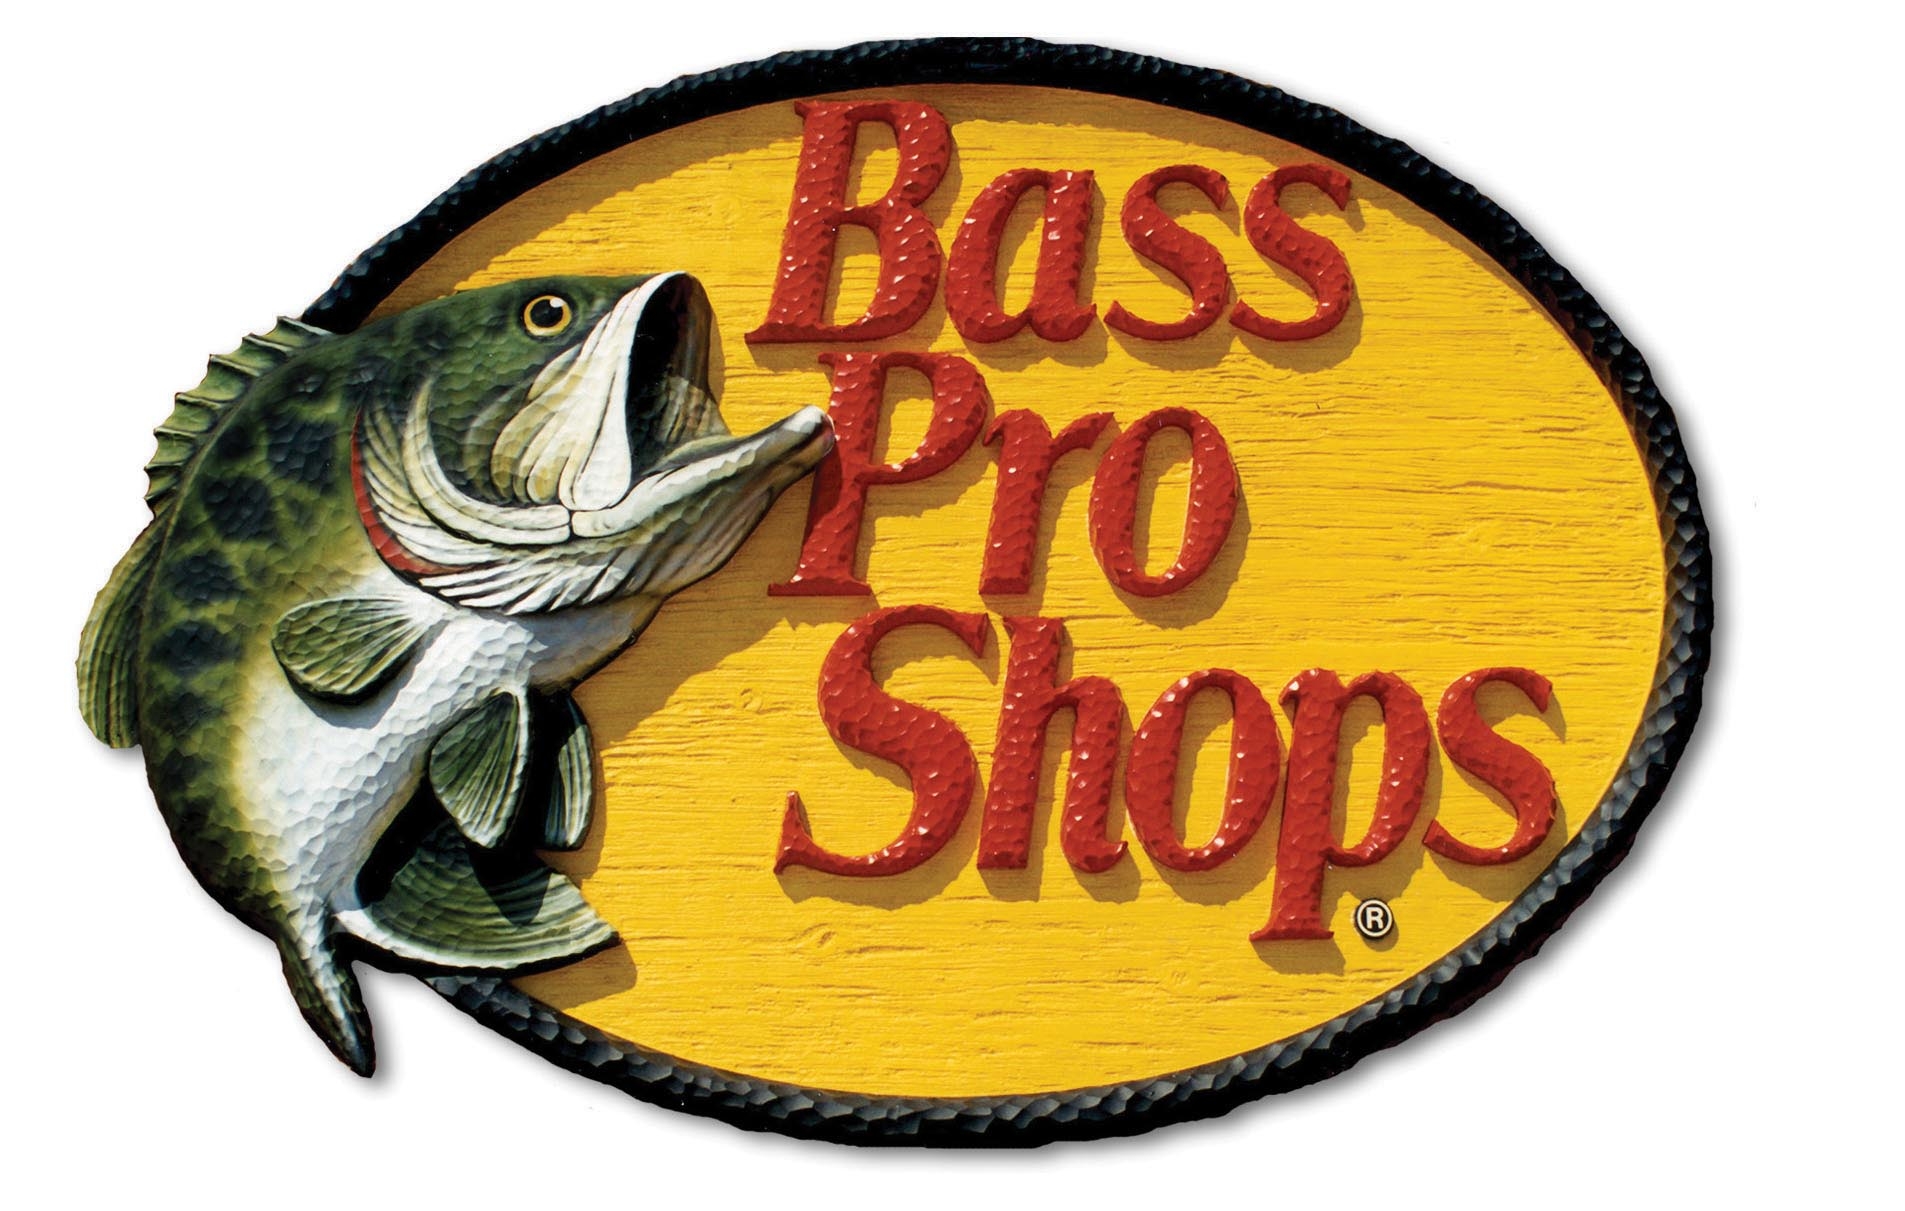 bass_pro_logo